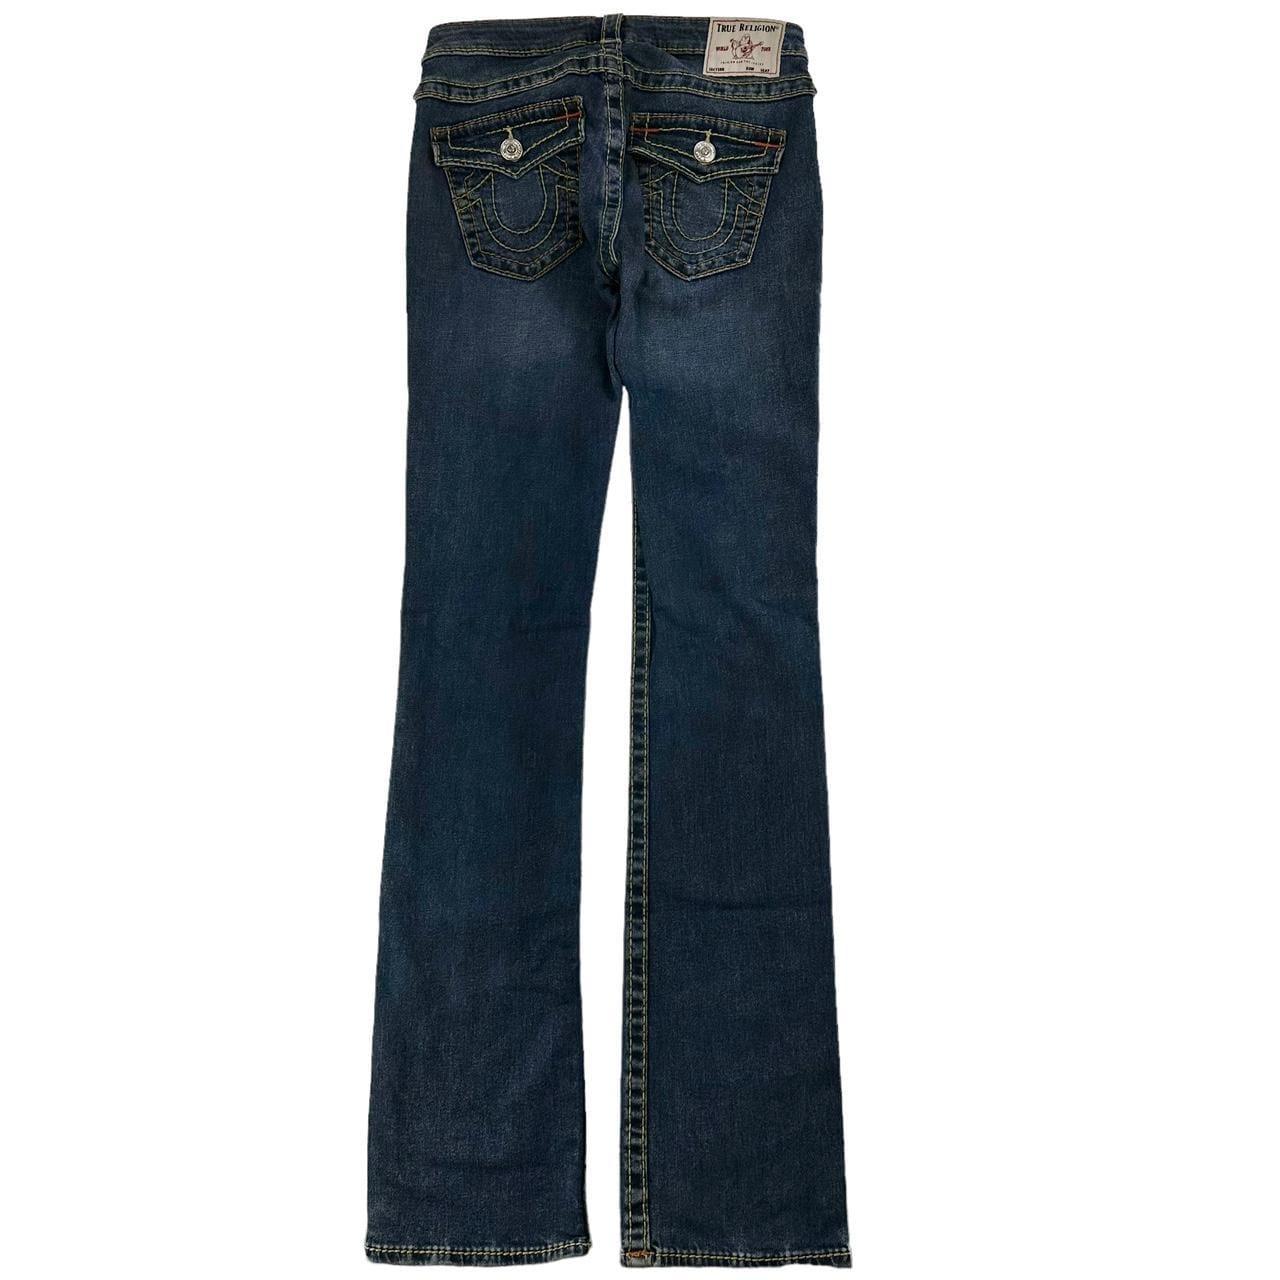 True Religion denim jeans trousers W26 - Known Source